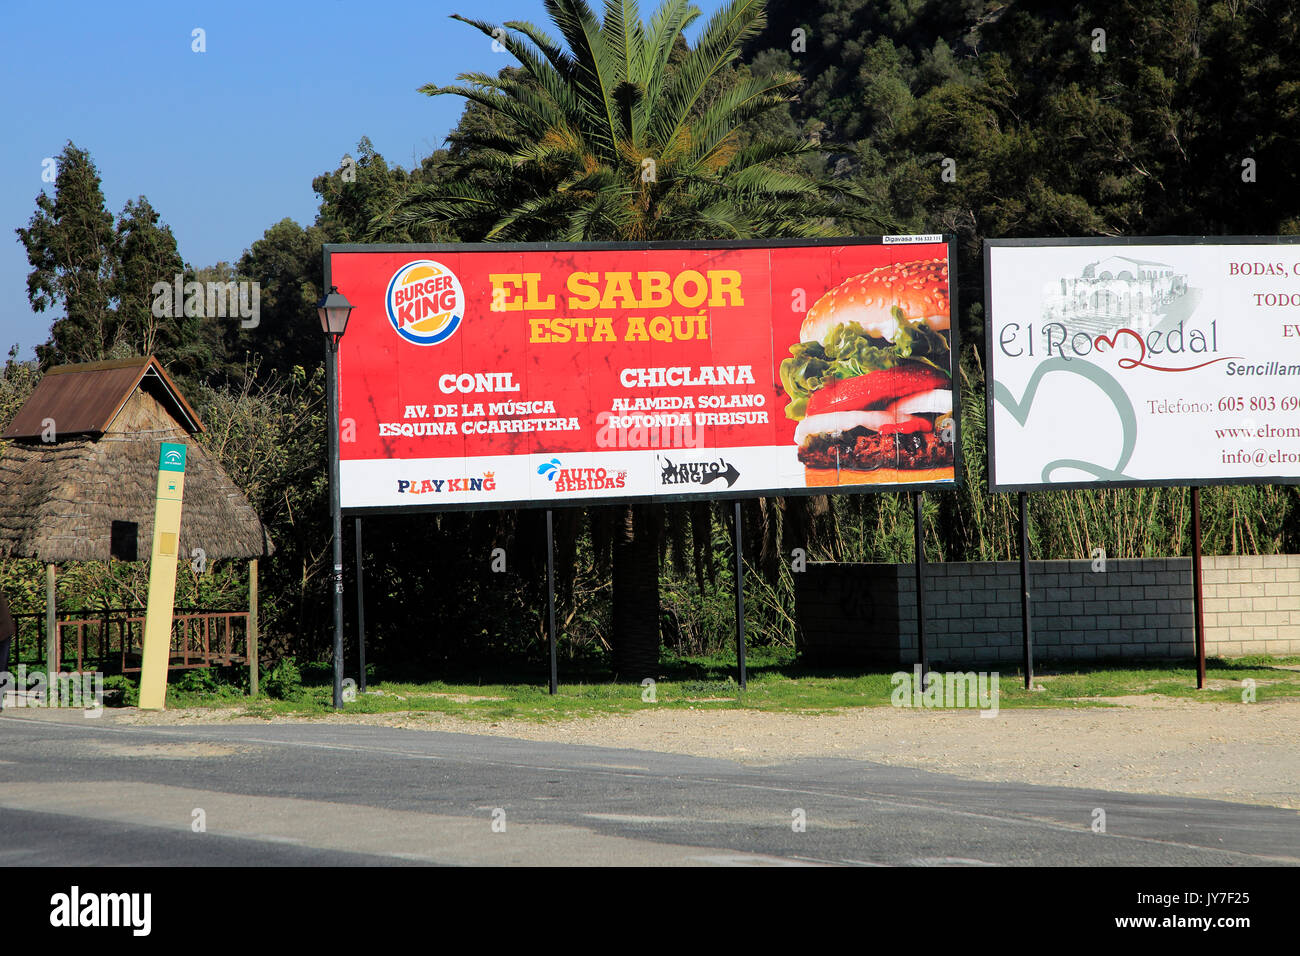 Burger King restaurant sign near Conil and Chiclana, Cadiz province, Spain Stock Photo